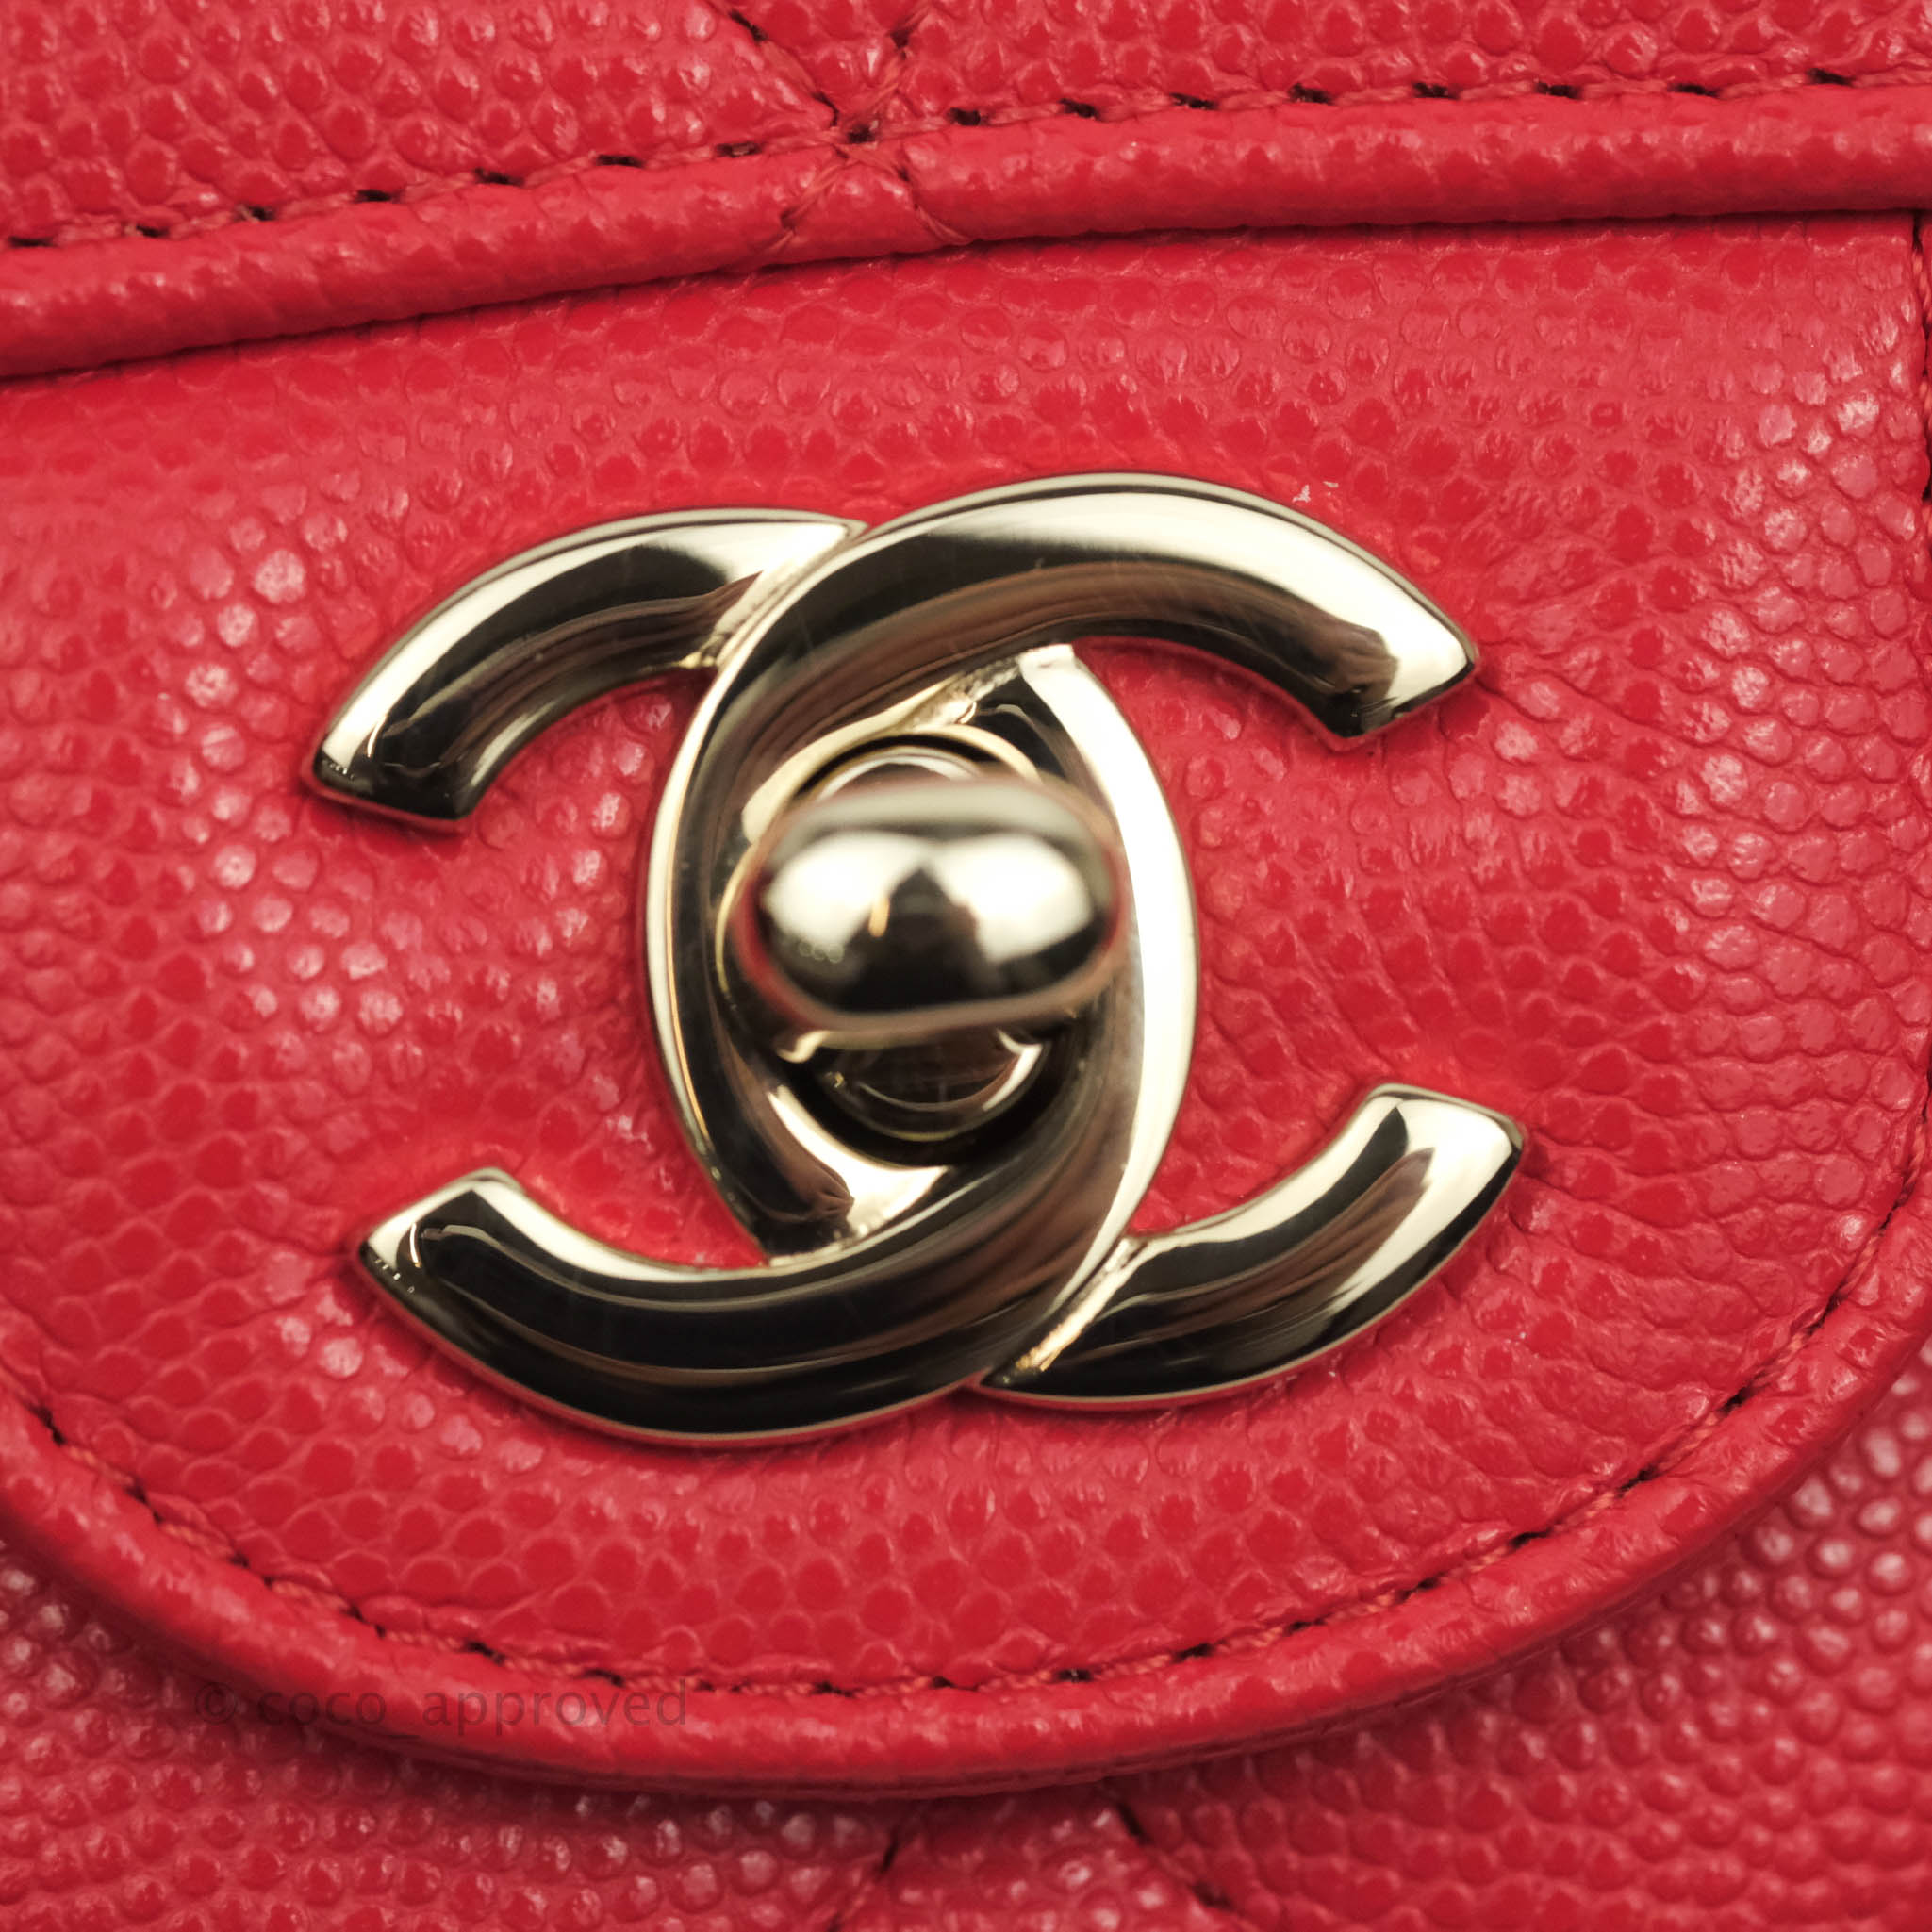 Chanel Classic M/L Medium Double Flap Chilli Red Caviar Gold Hardware –  Coco Approved Studio